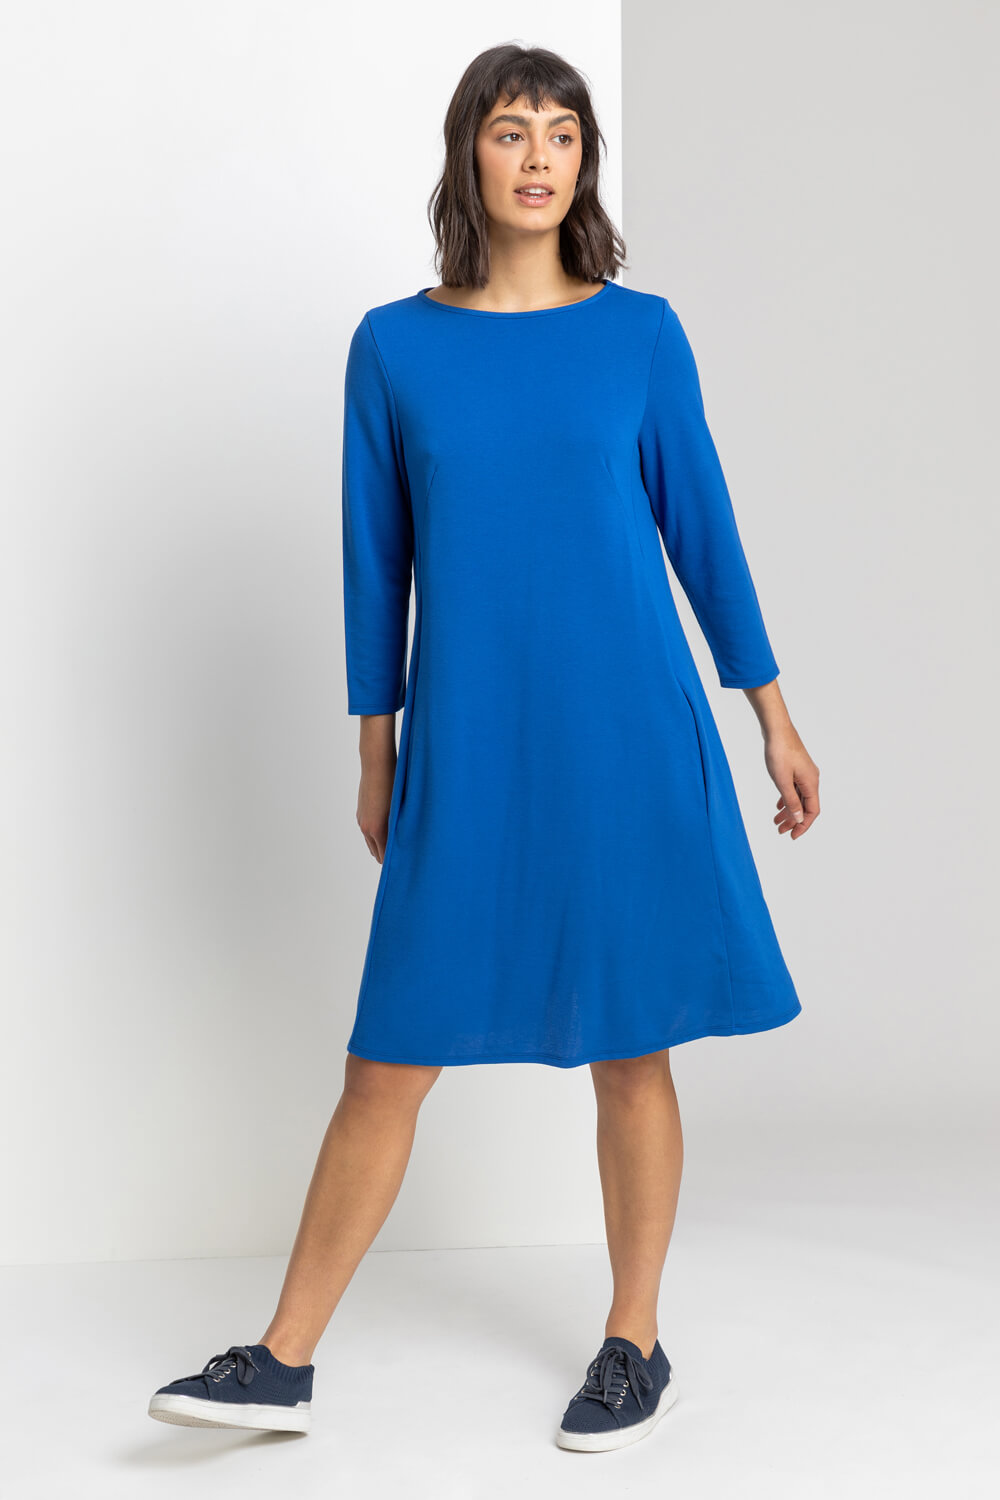 A-Line Pocket Detail Swing Dress in Royal Blue - Roman Originals UK